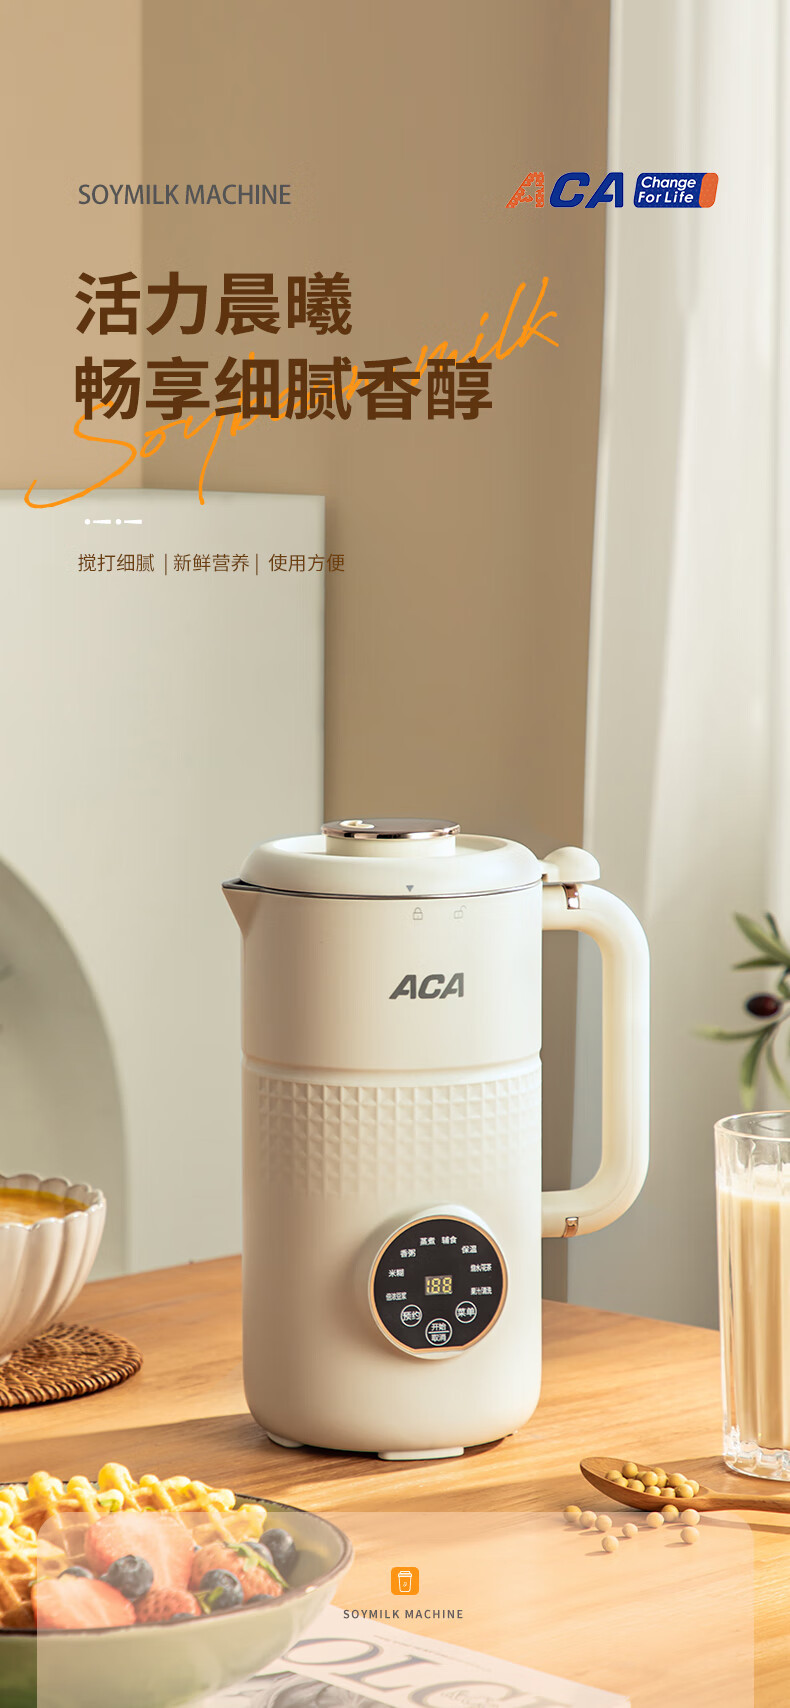 ACA 加热破壁料理机 ADY-G80PB16DR